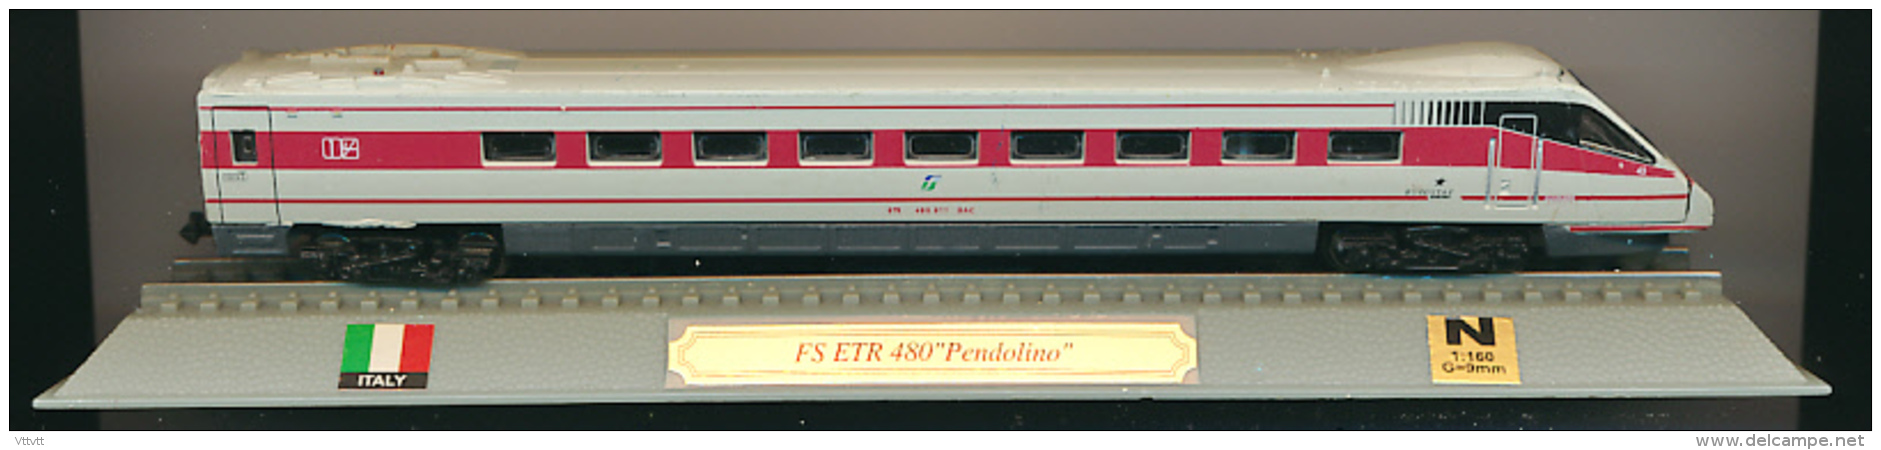 Locomotive : FS ETR 480 "Pendolino", Echelle N 1/160, G = 9 Mm, Italy, Italie - Locomotive